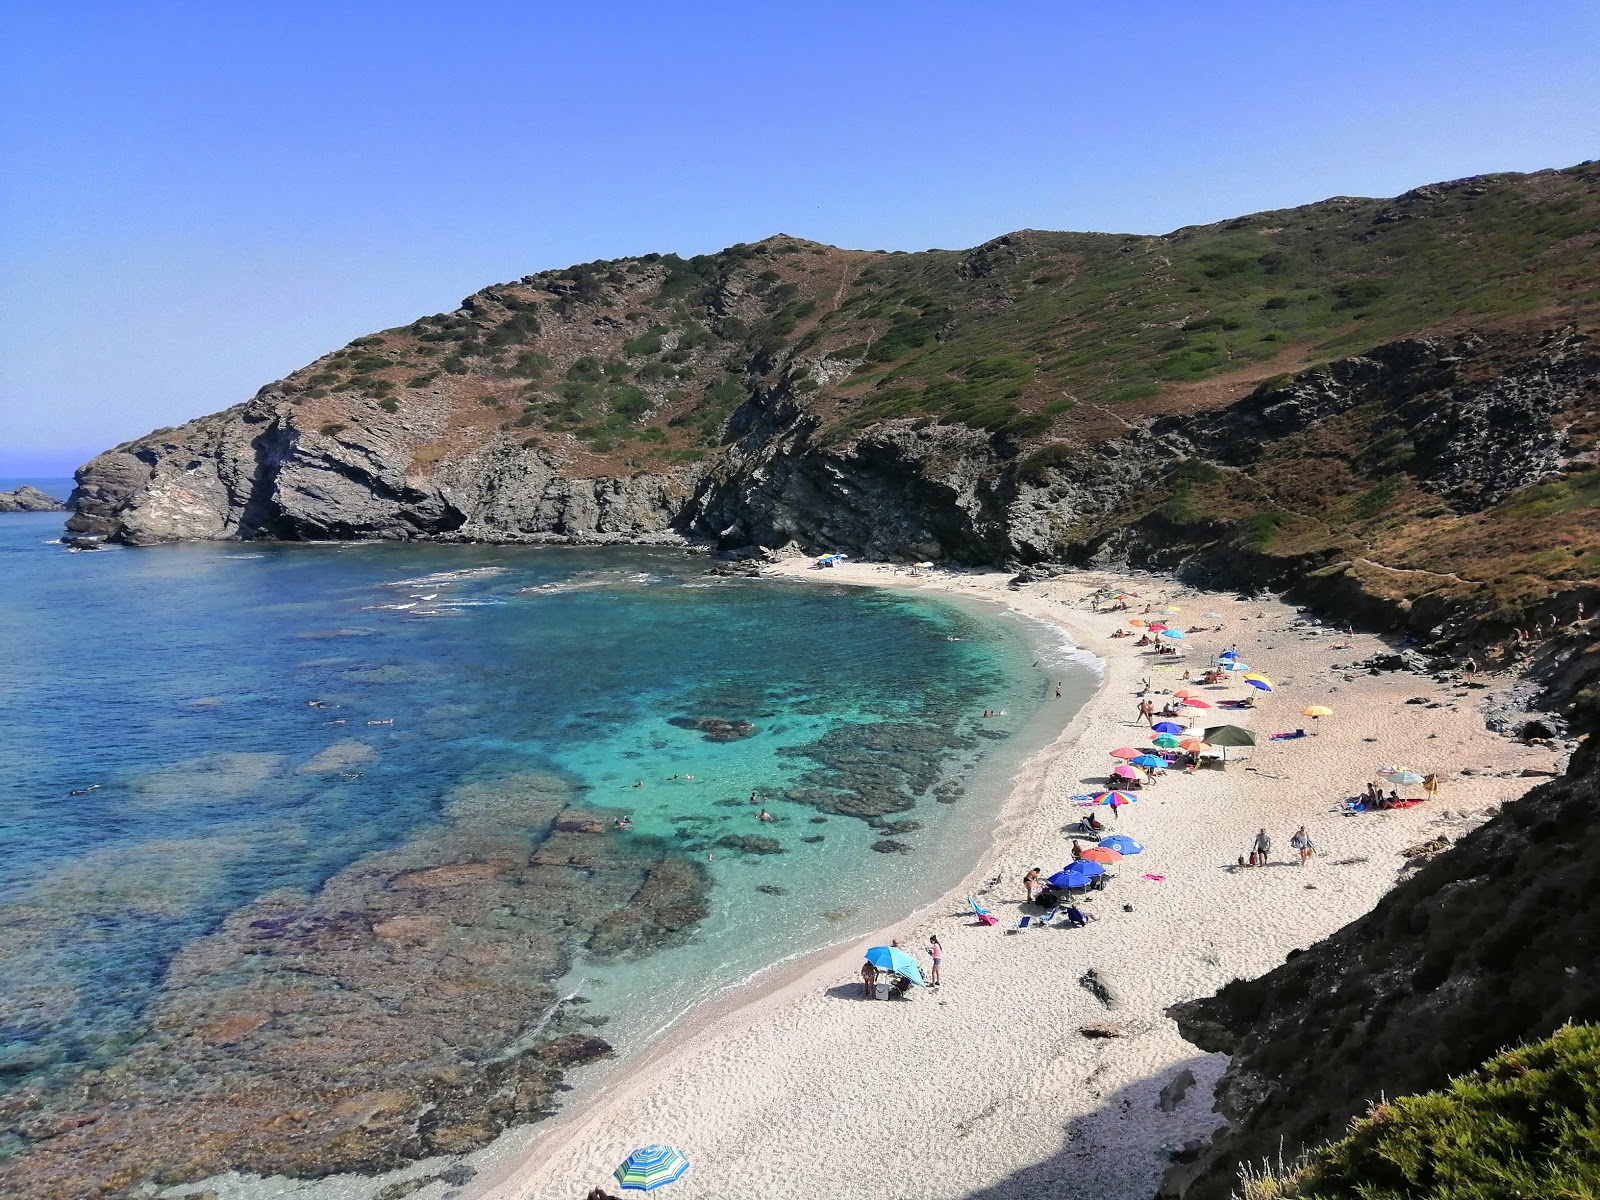 Spiaggia Di Rena Majore的照片 带有碧绿色纯水表面